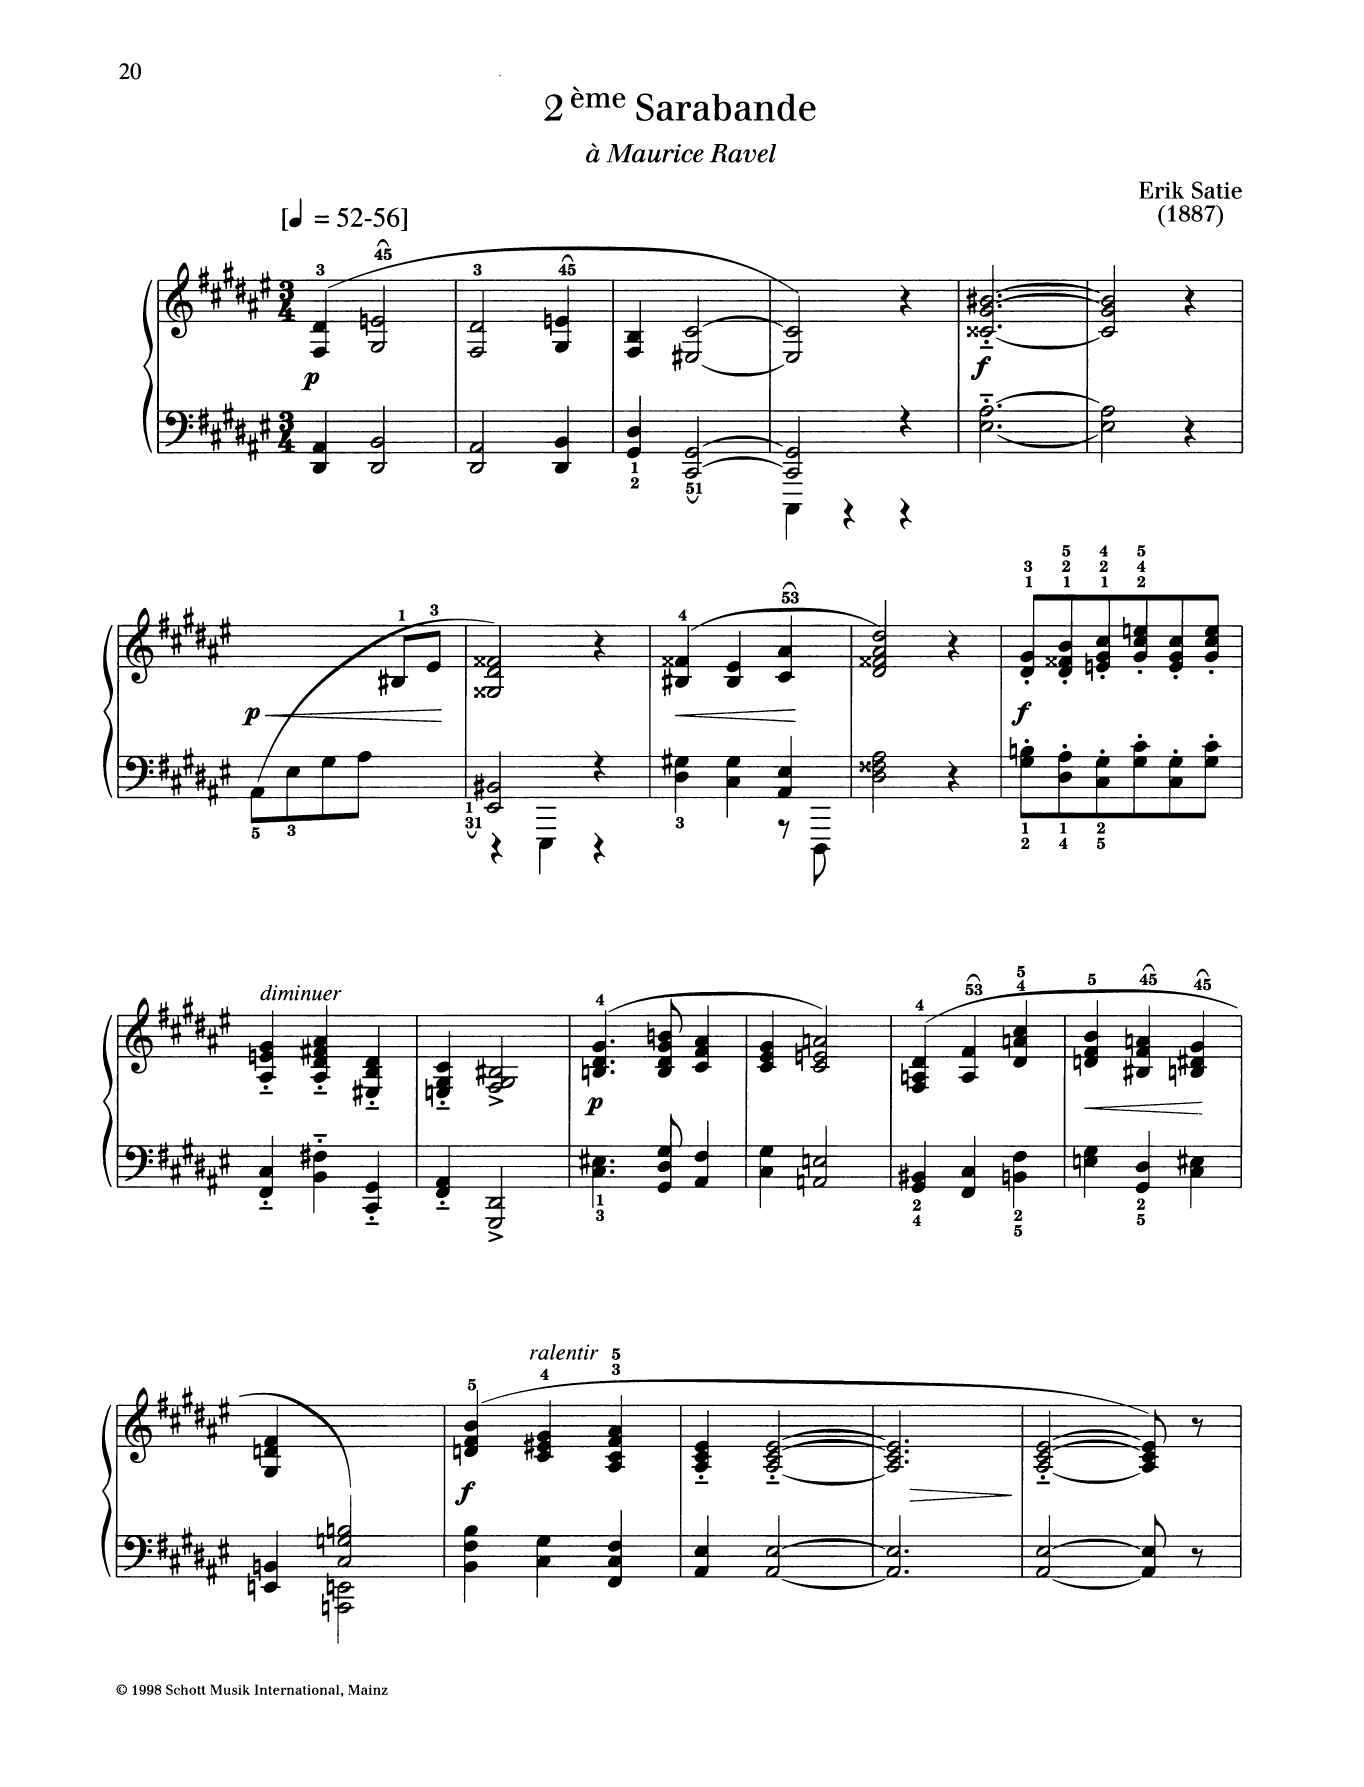 Erik Satie 2eme Sarabande Sheet Music Notes & Chords for Piano Solo - Download or Print PDF